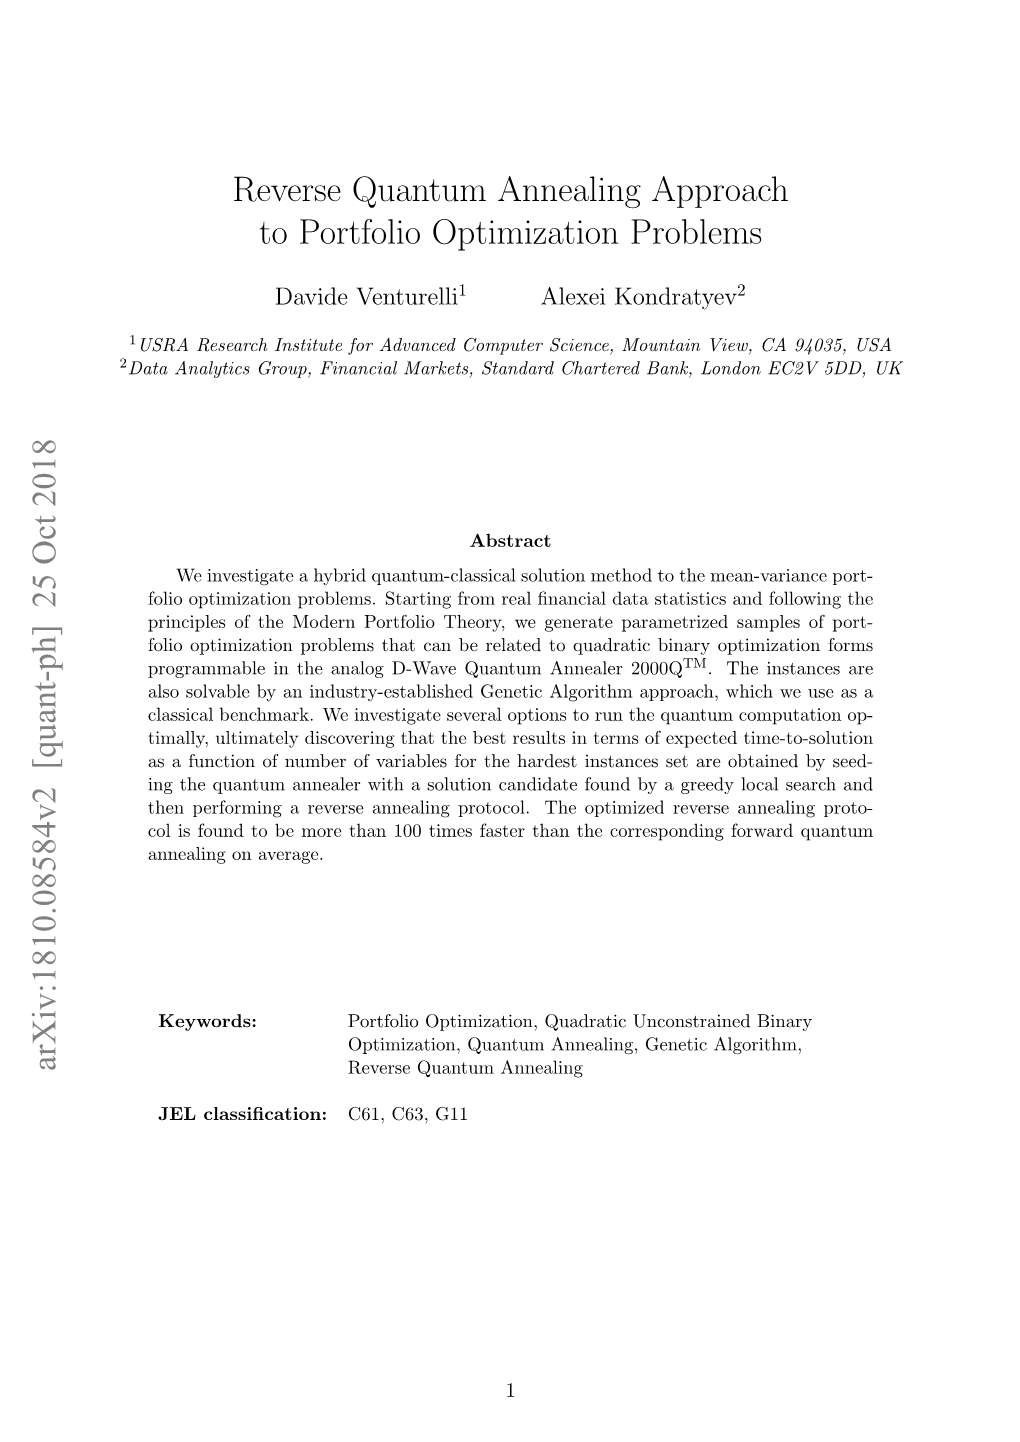 Reverse Quantum Annealing Approach to Portfolio Optimization Problems